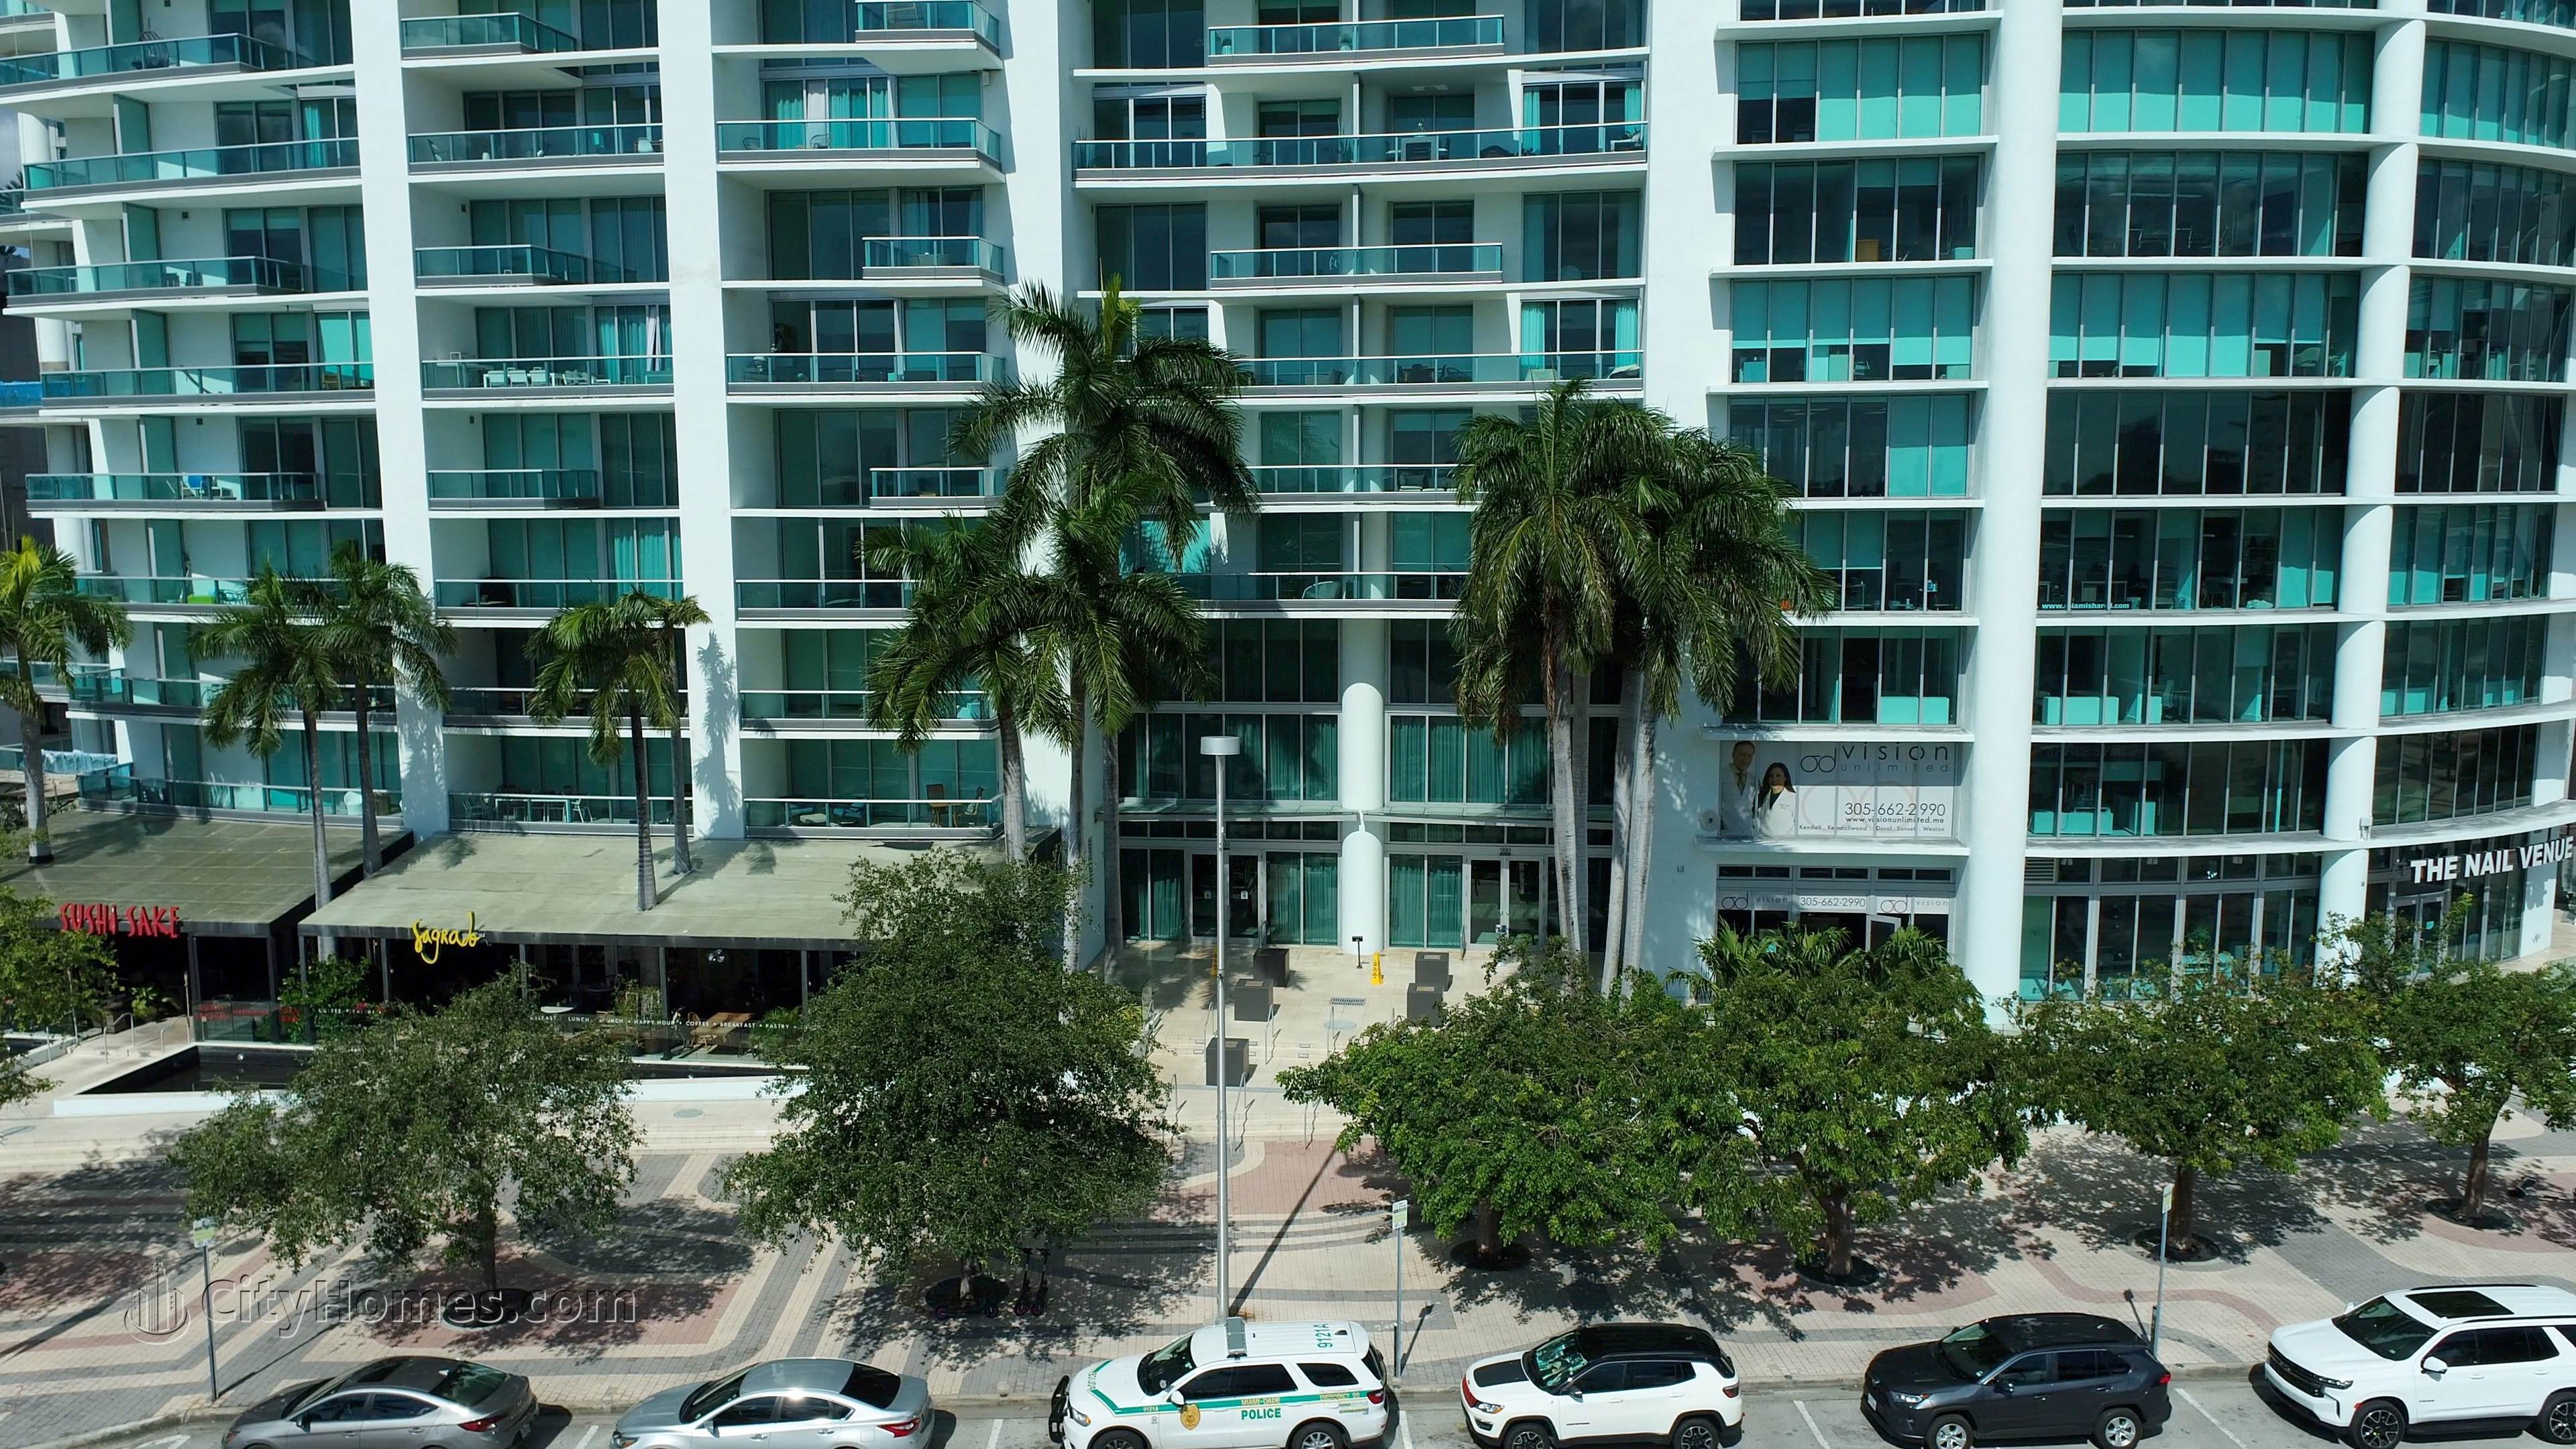 6. 900 Biscayne Bay building at 900 Biscayne Boulevard, Miami, FL 33132